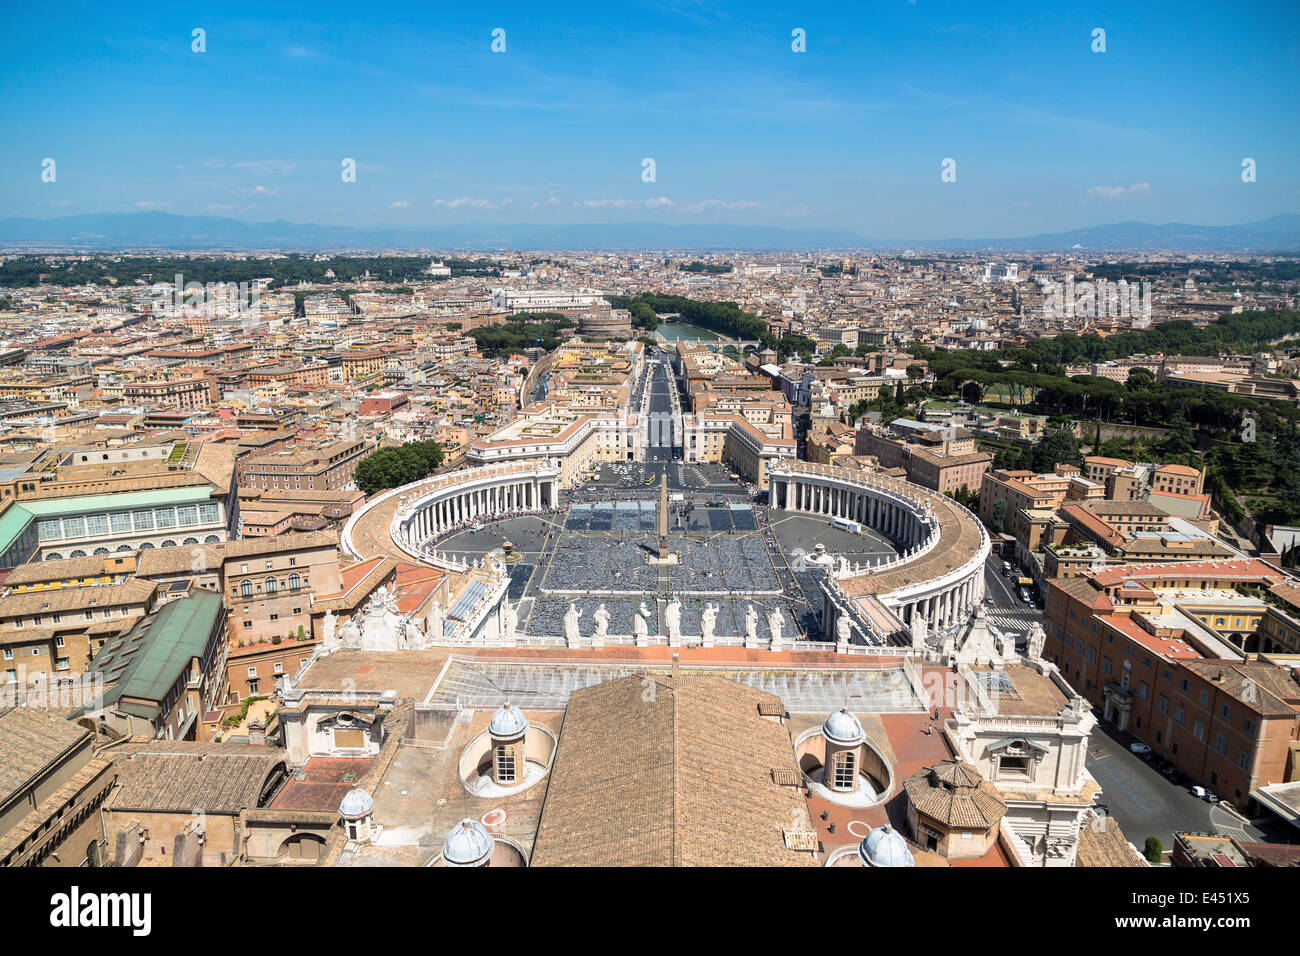 Vista de la plaza de San Pedro y Roma desde la cúpula de la Basílica de San Pedro, el Vaticano, Roma, Lazio, Italia Foto de stock